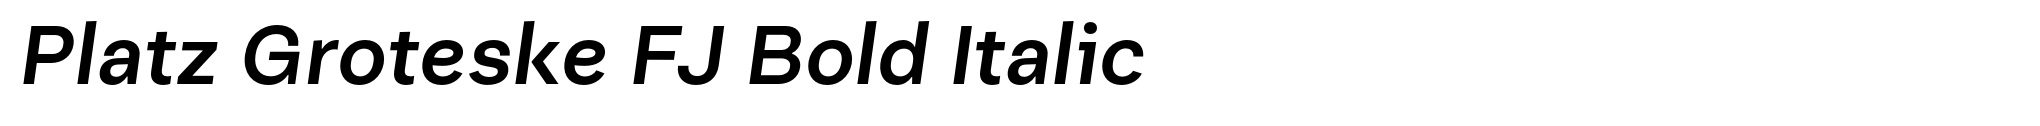 Platz Groteske FJ Bold Italic image